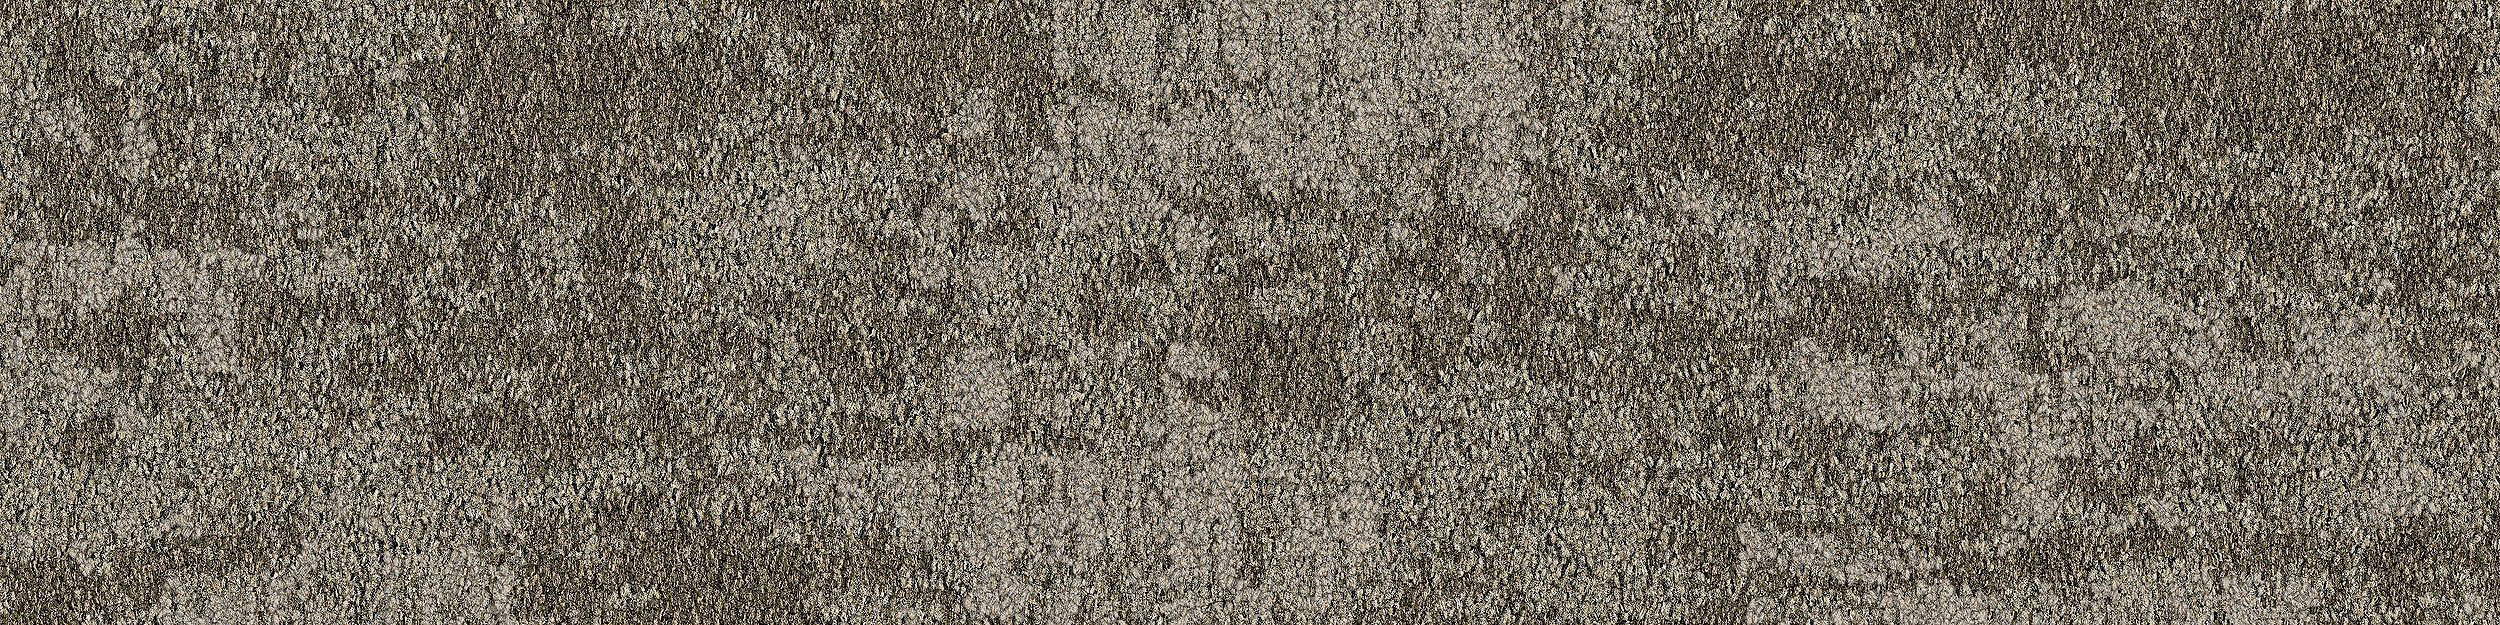 Just Deserts Carpet Tile in Yucca numéro d’image 5